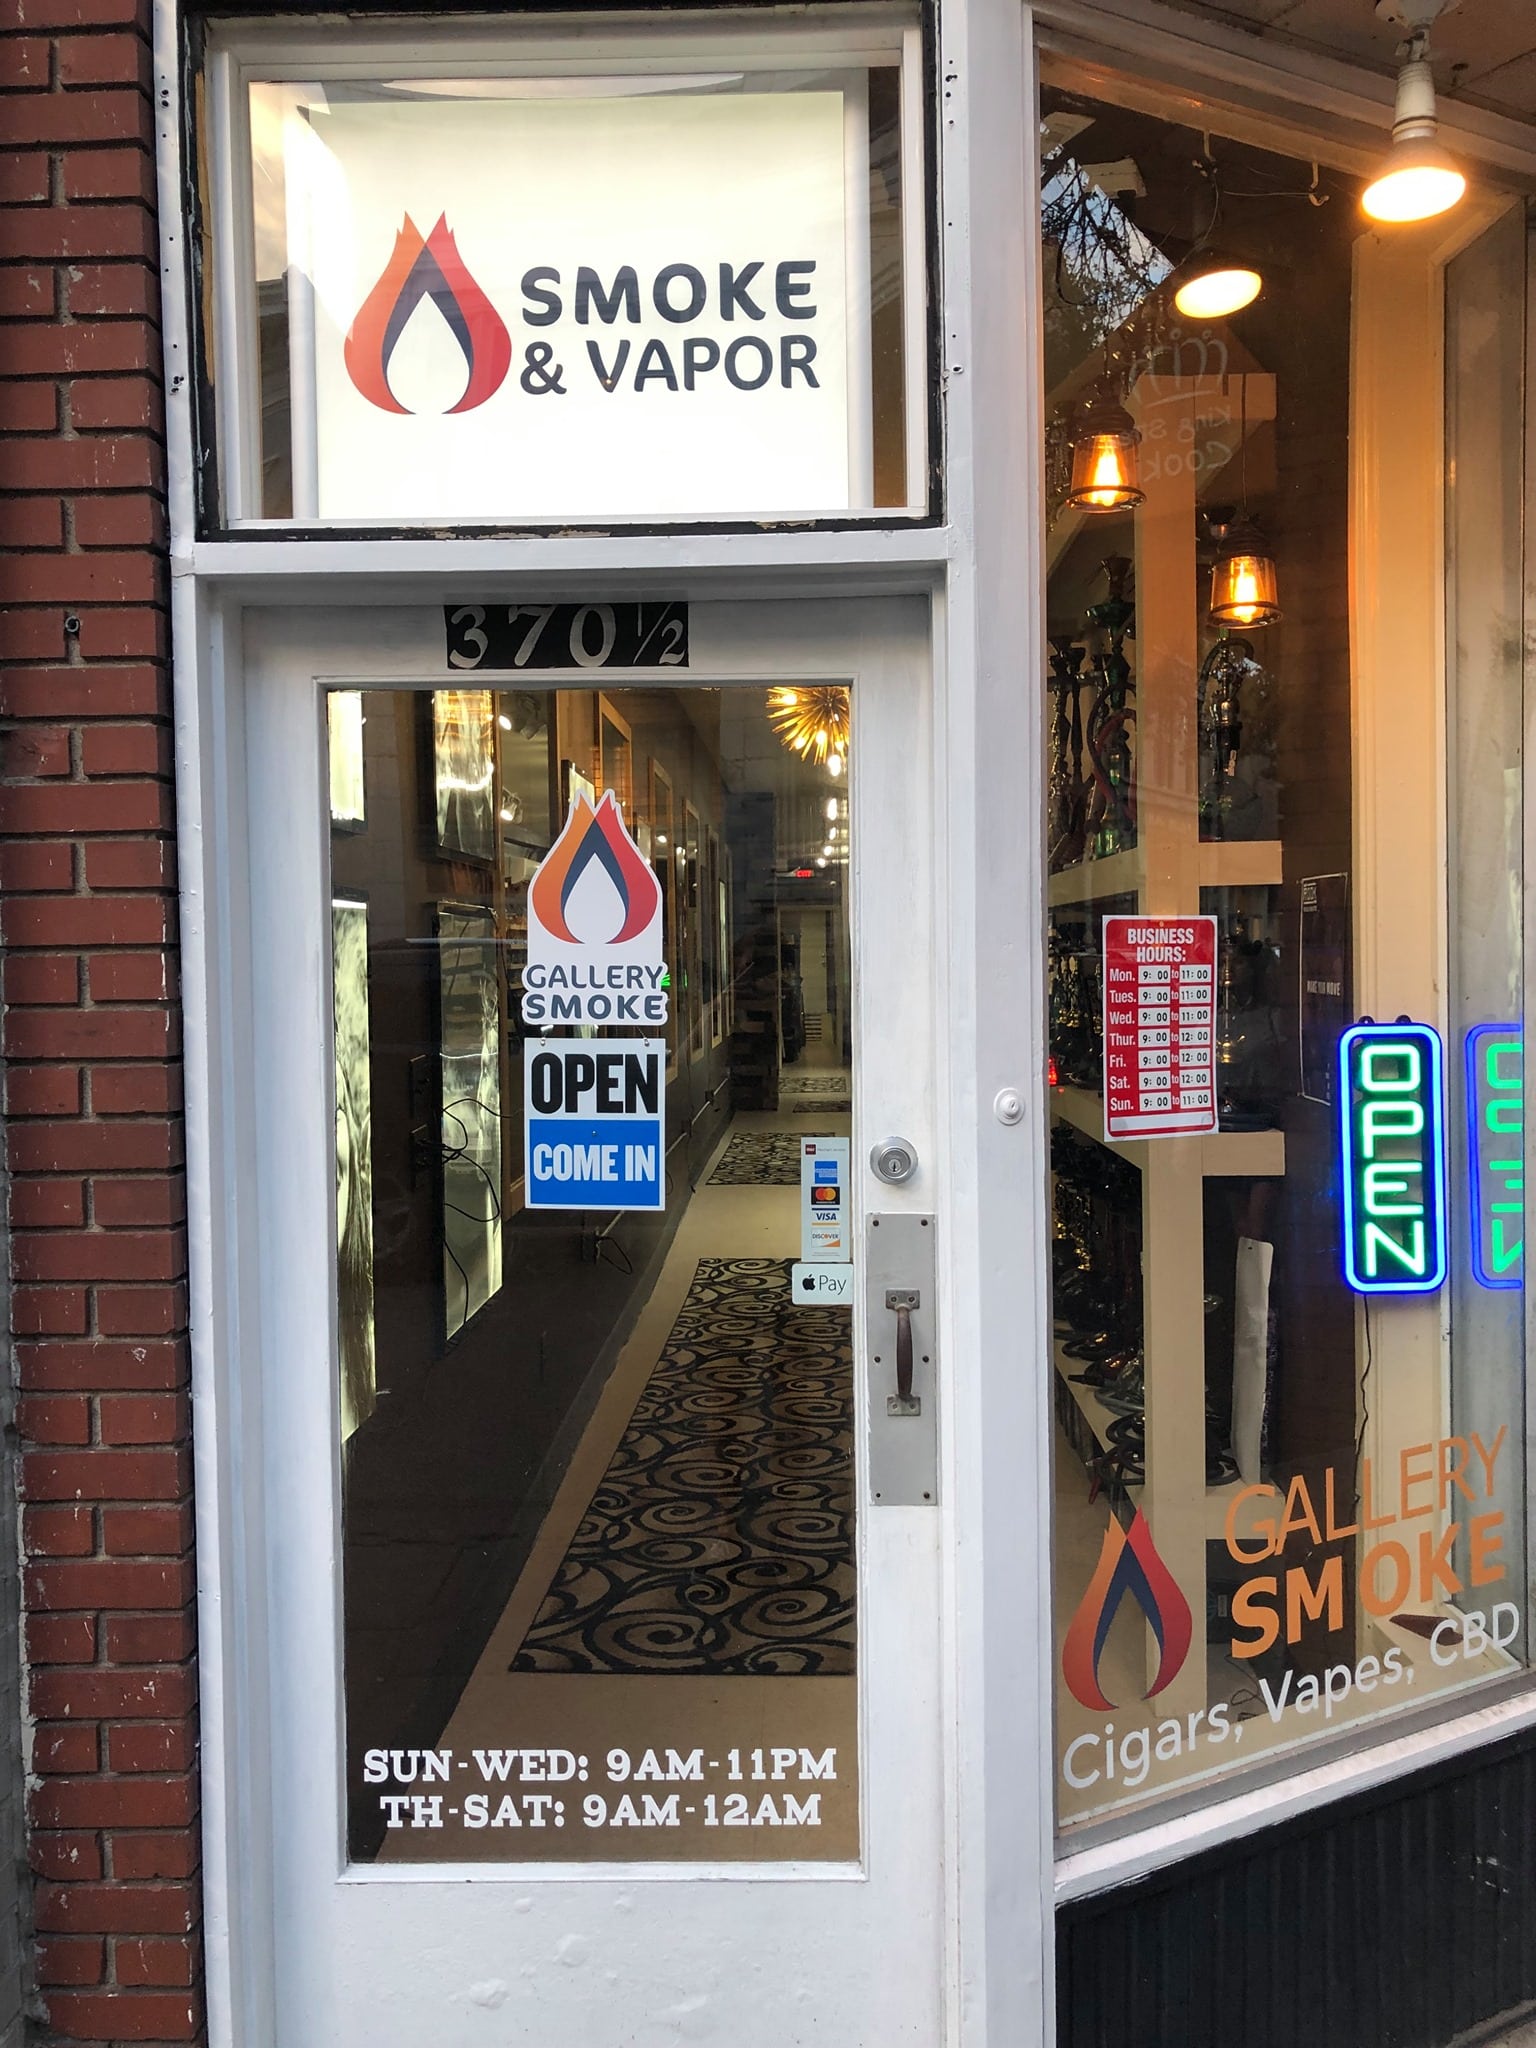 Gallery Smoke,370 King St, Charleston, SC 29401, United States